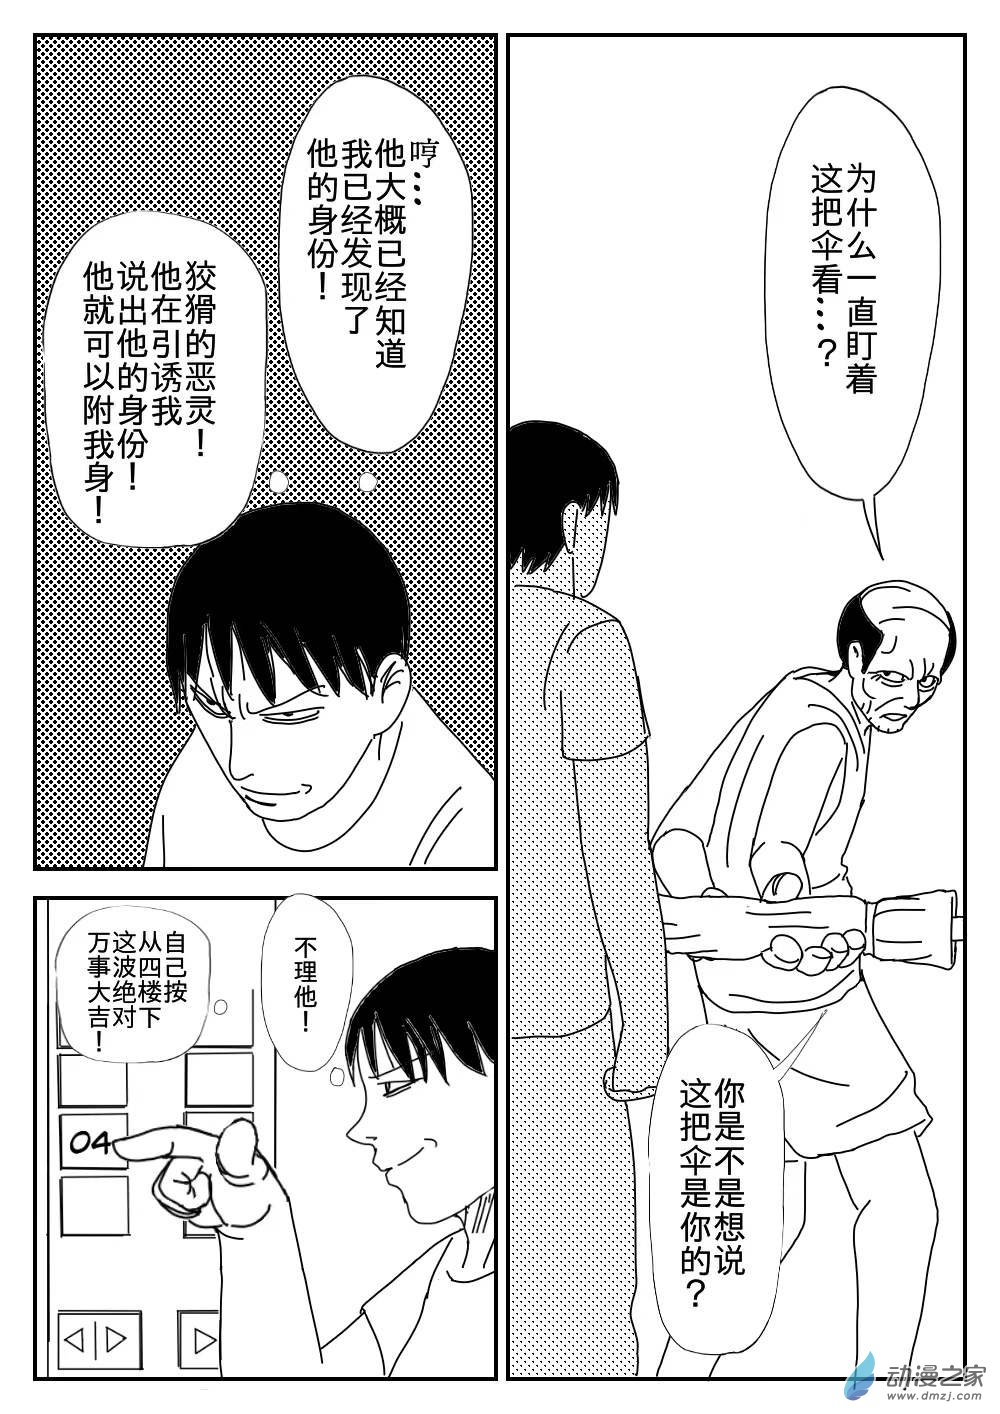 K神的短篇漫畫集 - 02 道格先生 - 5